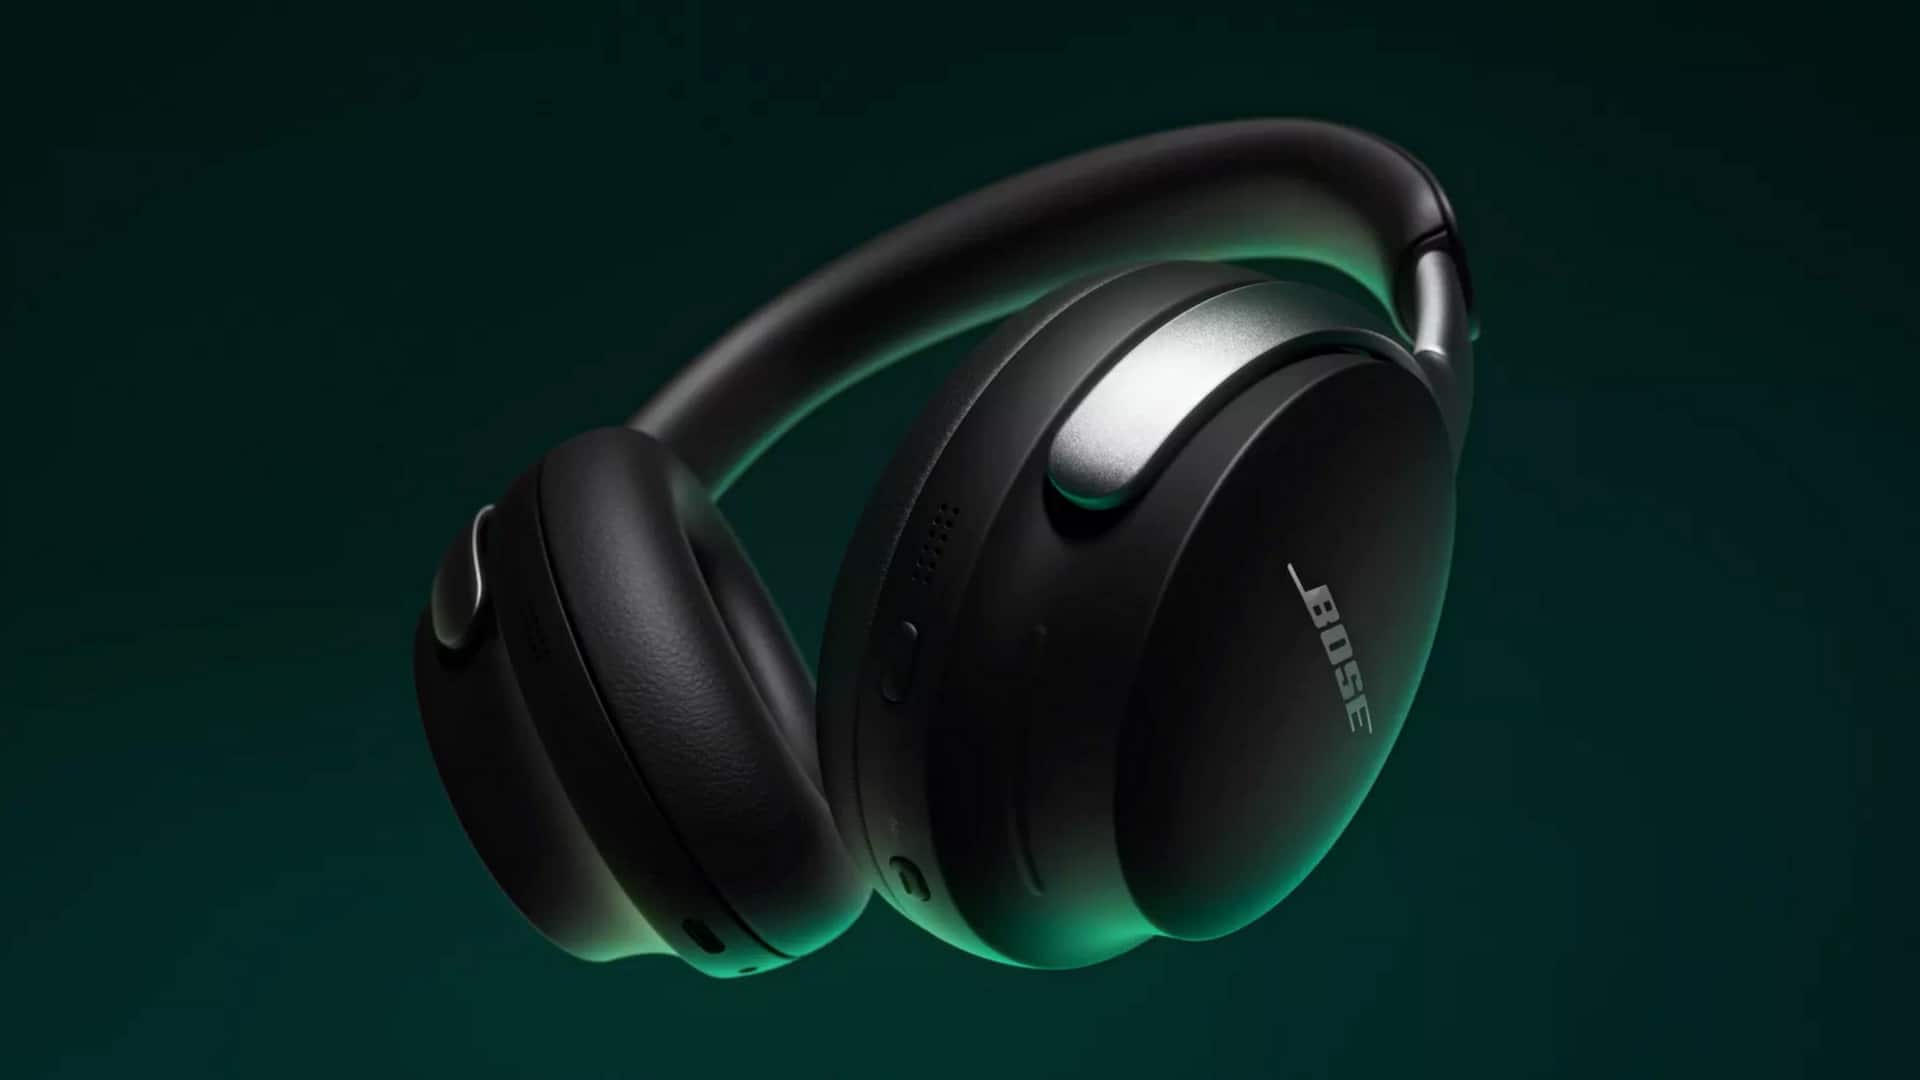 Bose QuietComfort headphones, earbuds take on Sony's premium audio wearables